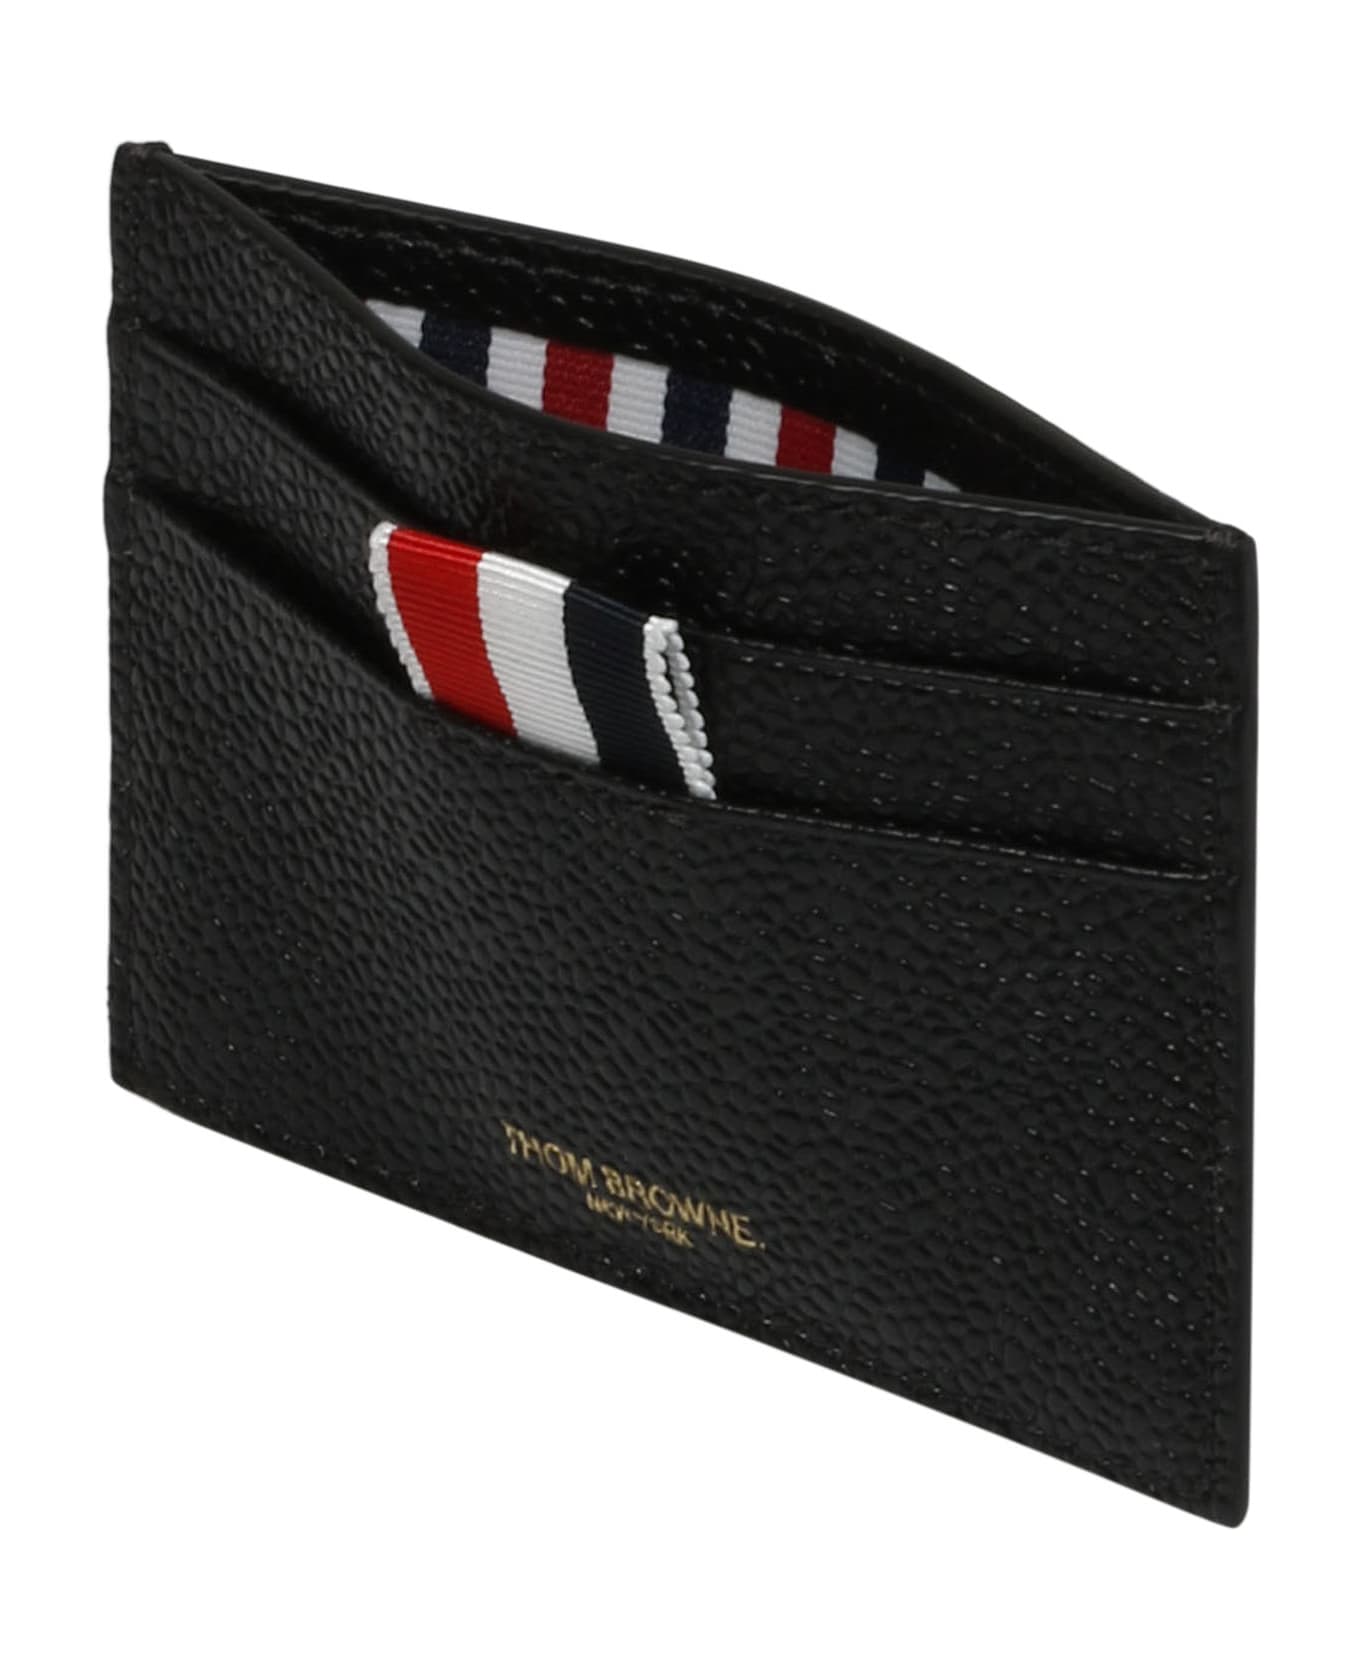 Thom Browne Black Pebble Grain Leather Card Holder - Black 財布